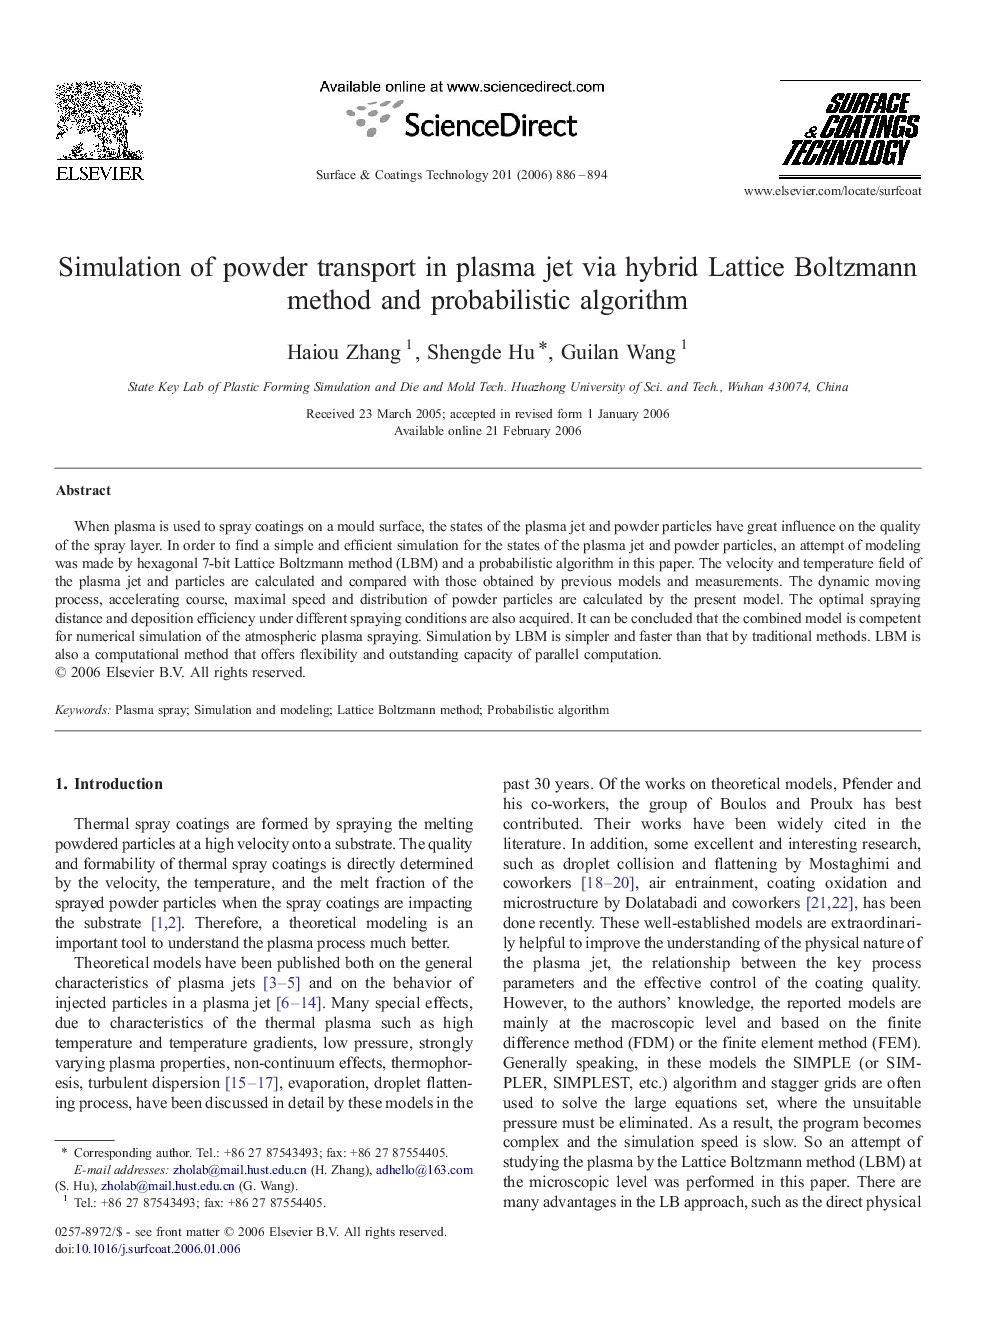 Simulation of powder transport in plasma jet via hybrid Lattice Boltzmann method and probabilistic algorithm